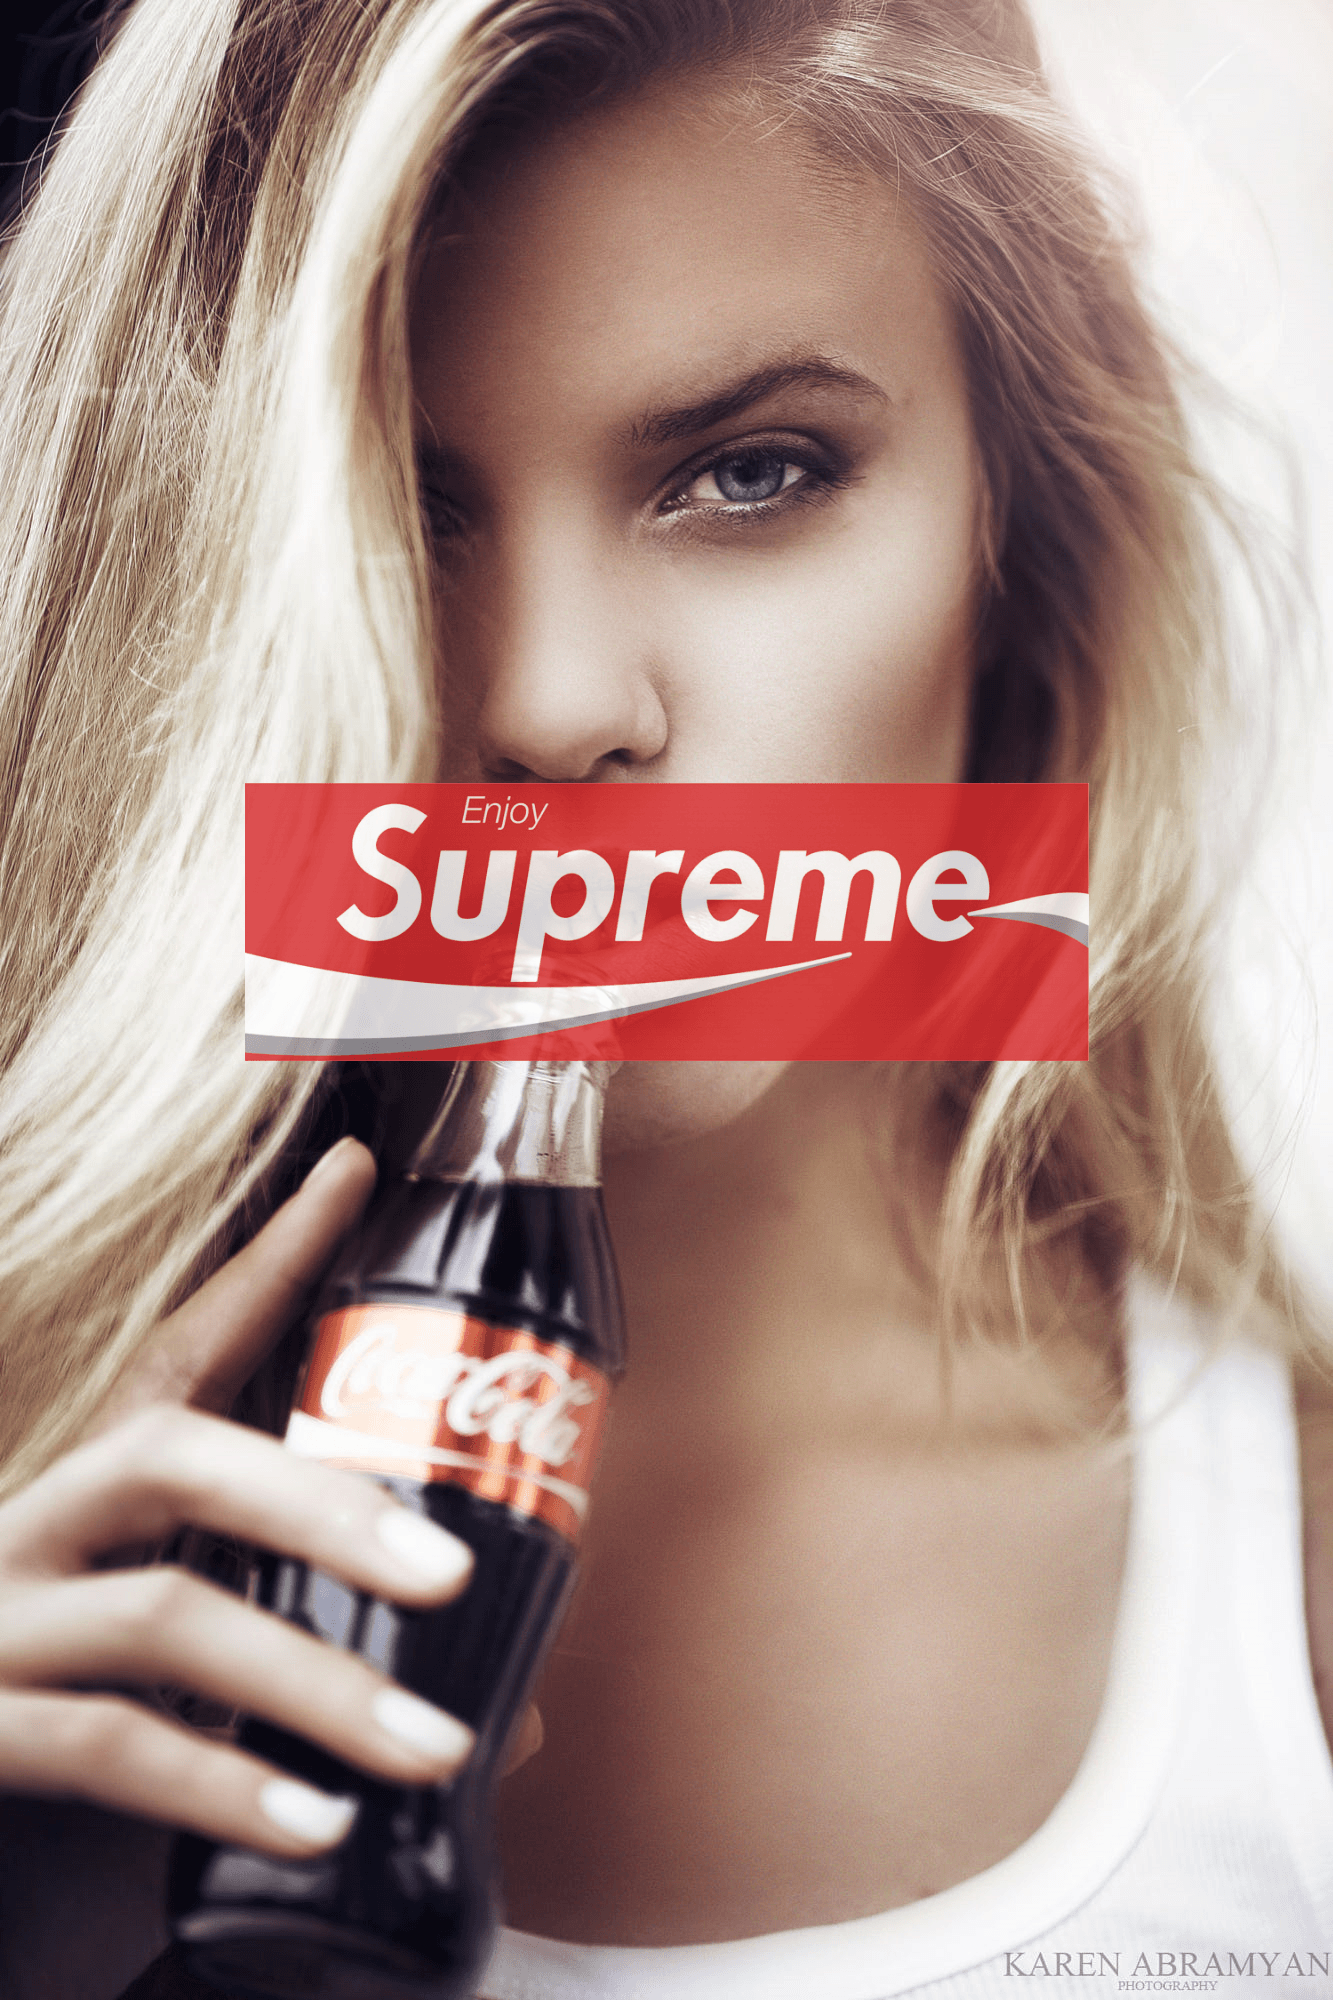 Supreme Coke Girl iPhone Wallpaper. Supreme wallpaper, Girl iphone wallpaper, Supreme girls